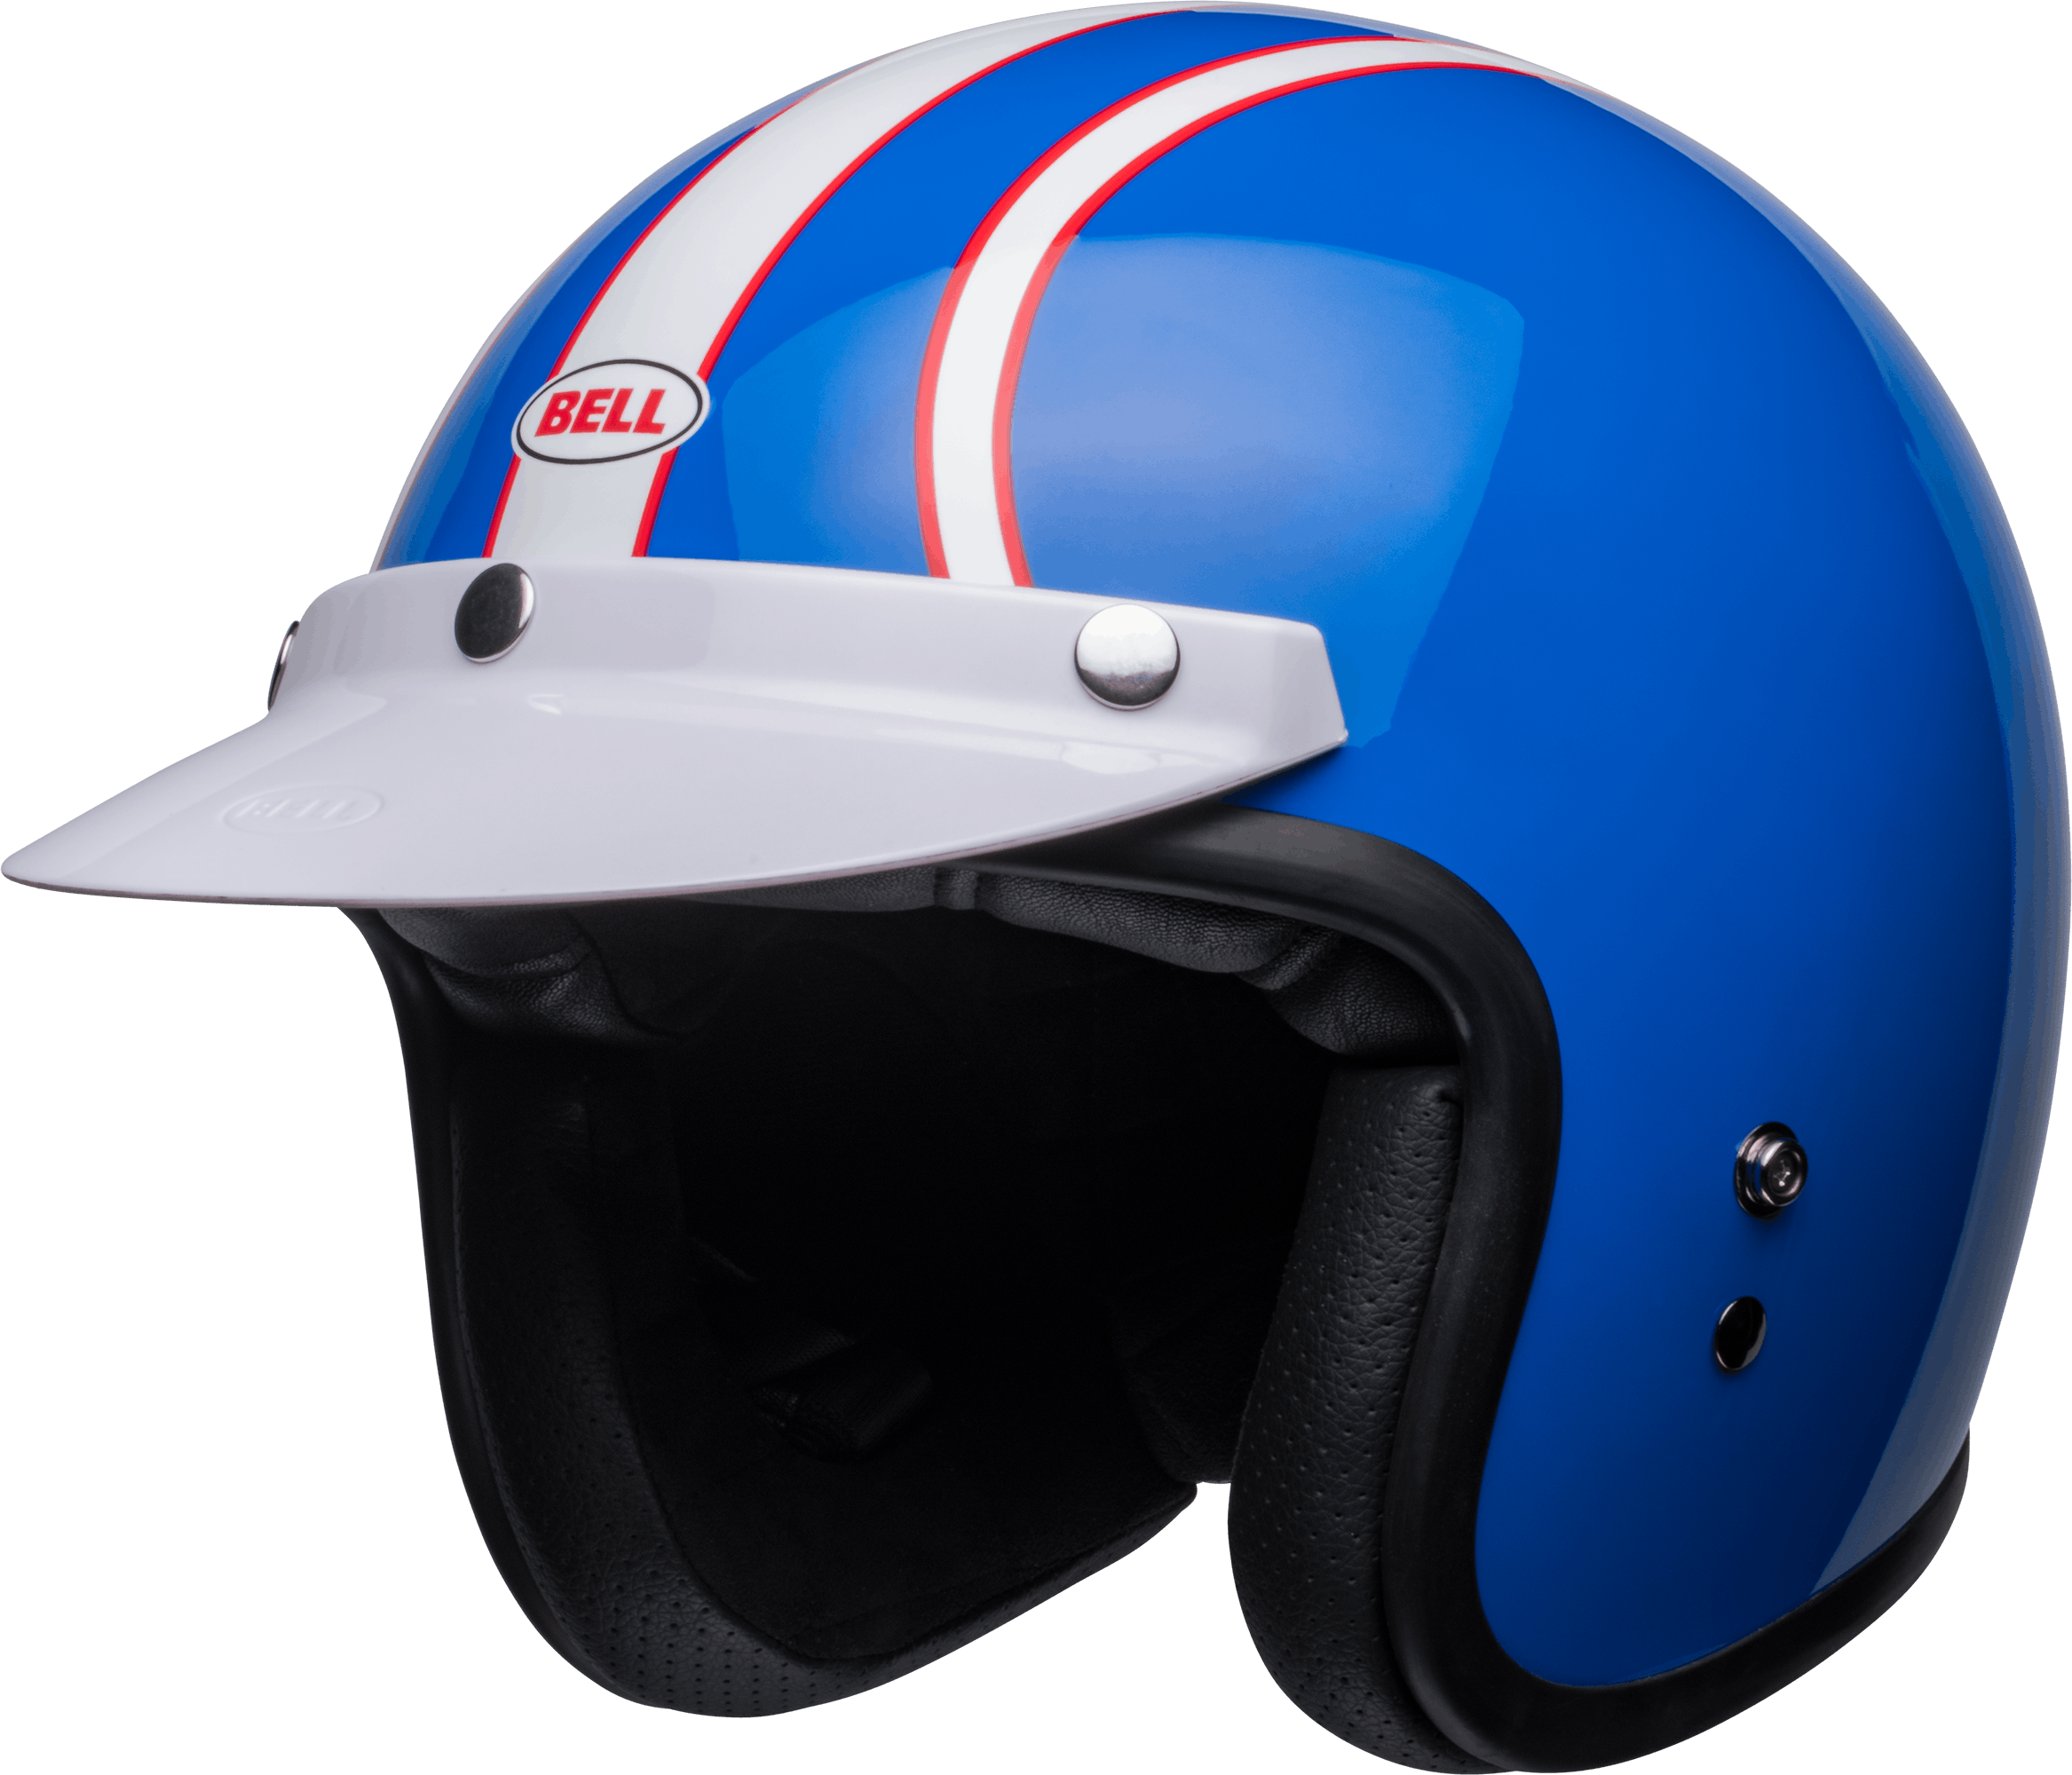 bell-custom-500-street-culture-motorcycle-helmet-six-day-mcqueen-gloss-blue-white-front-left[48]